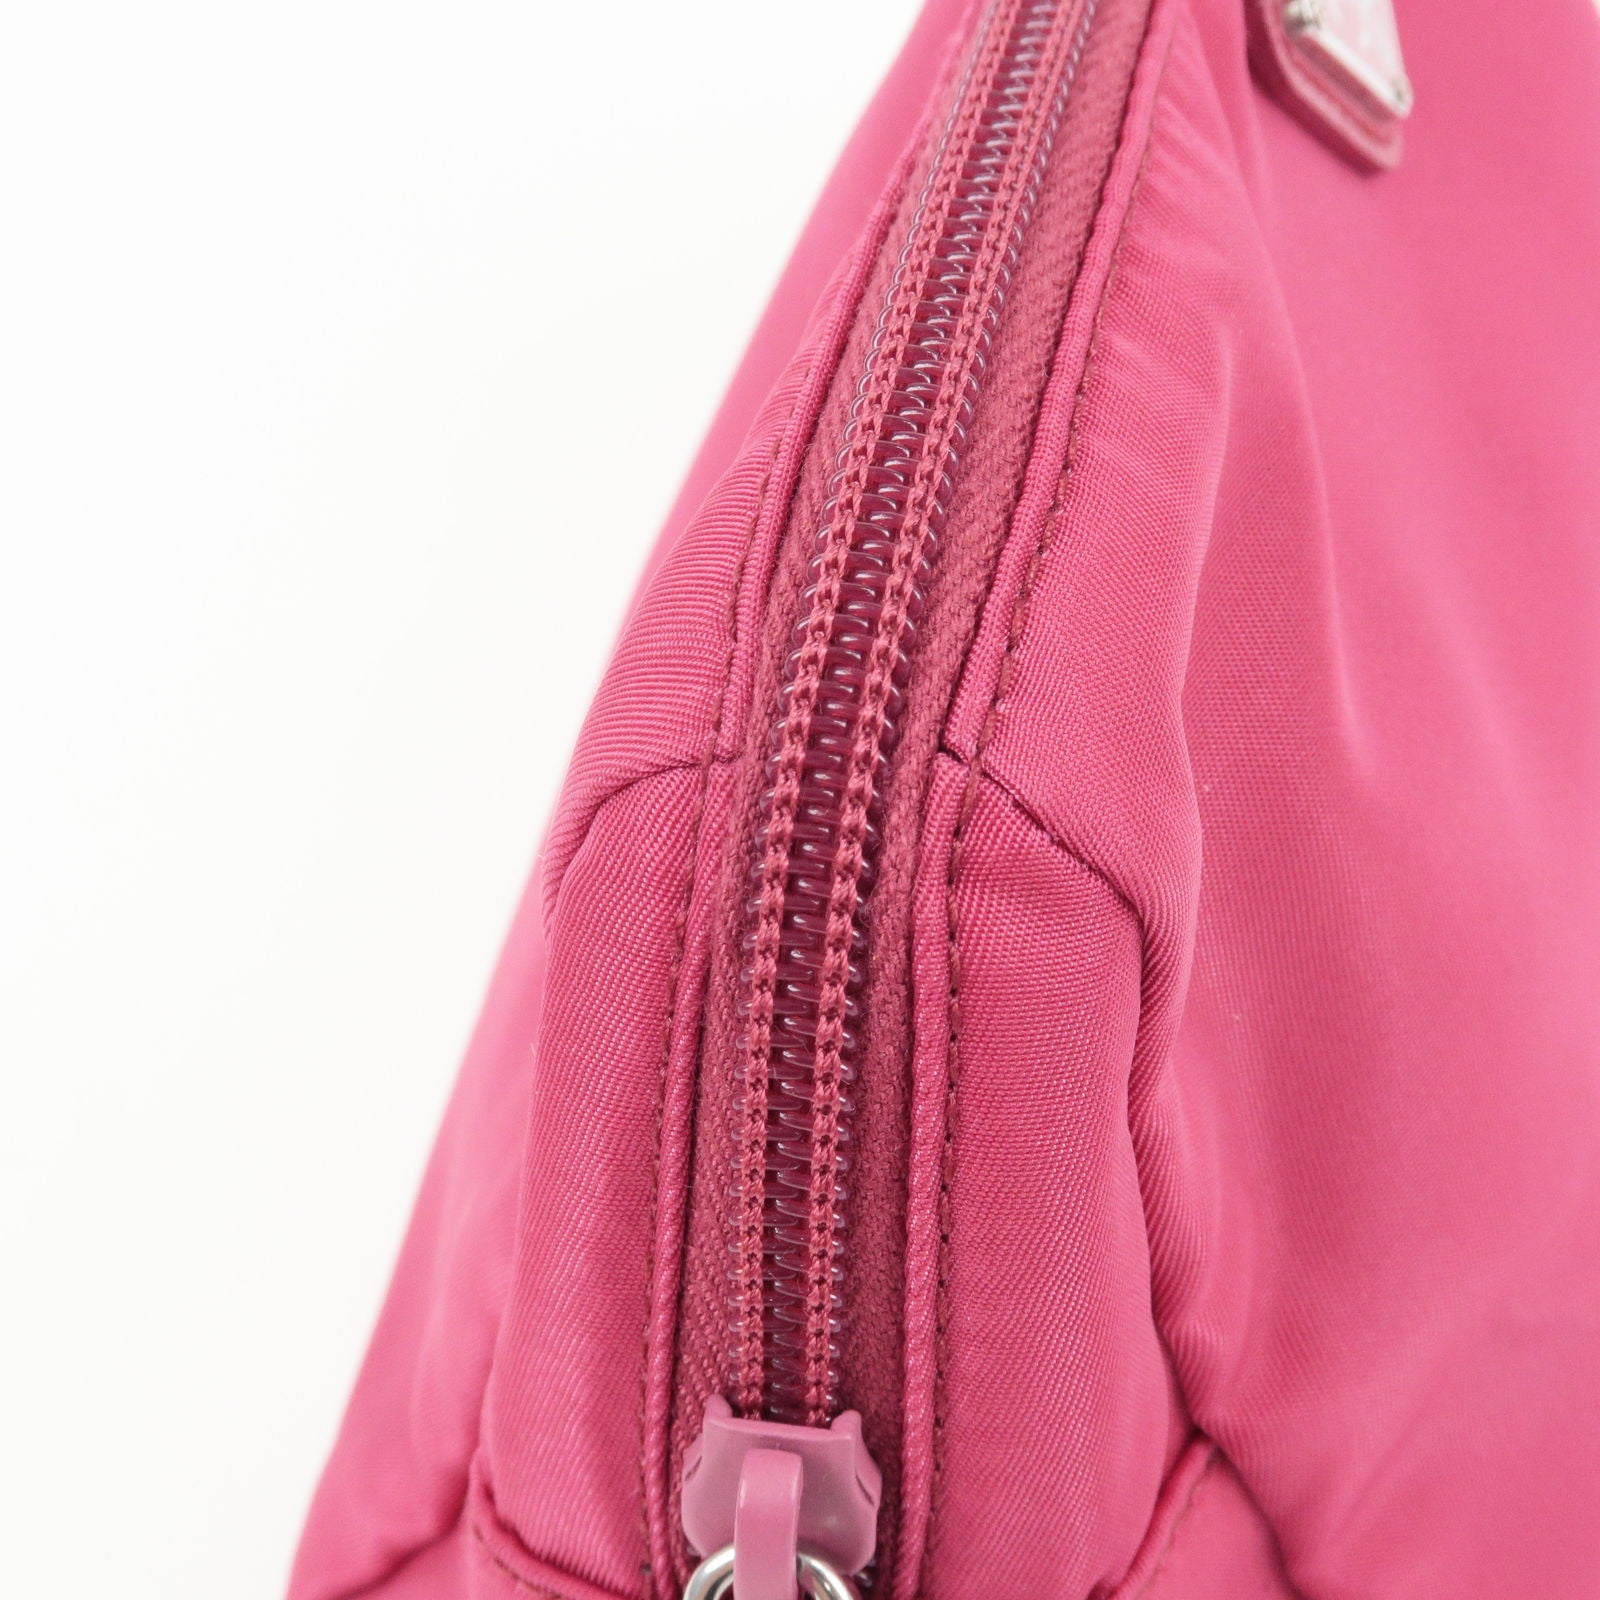 Prada Logo Plaque Zipped Tote Bag in Pink